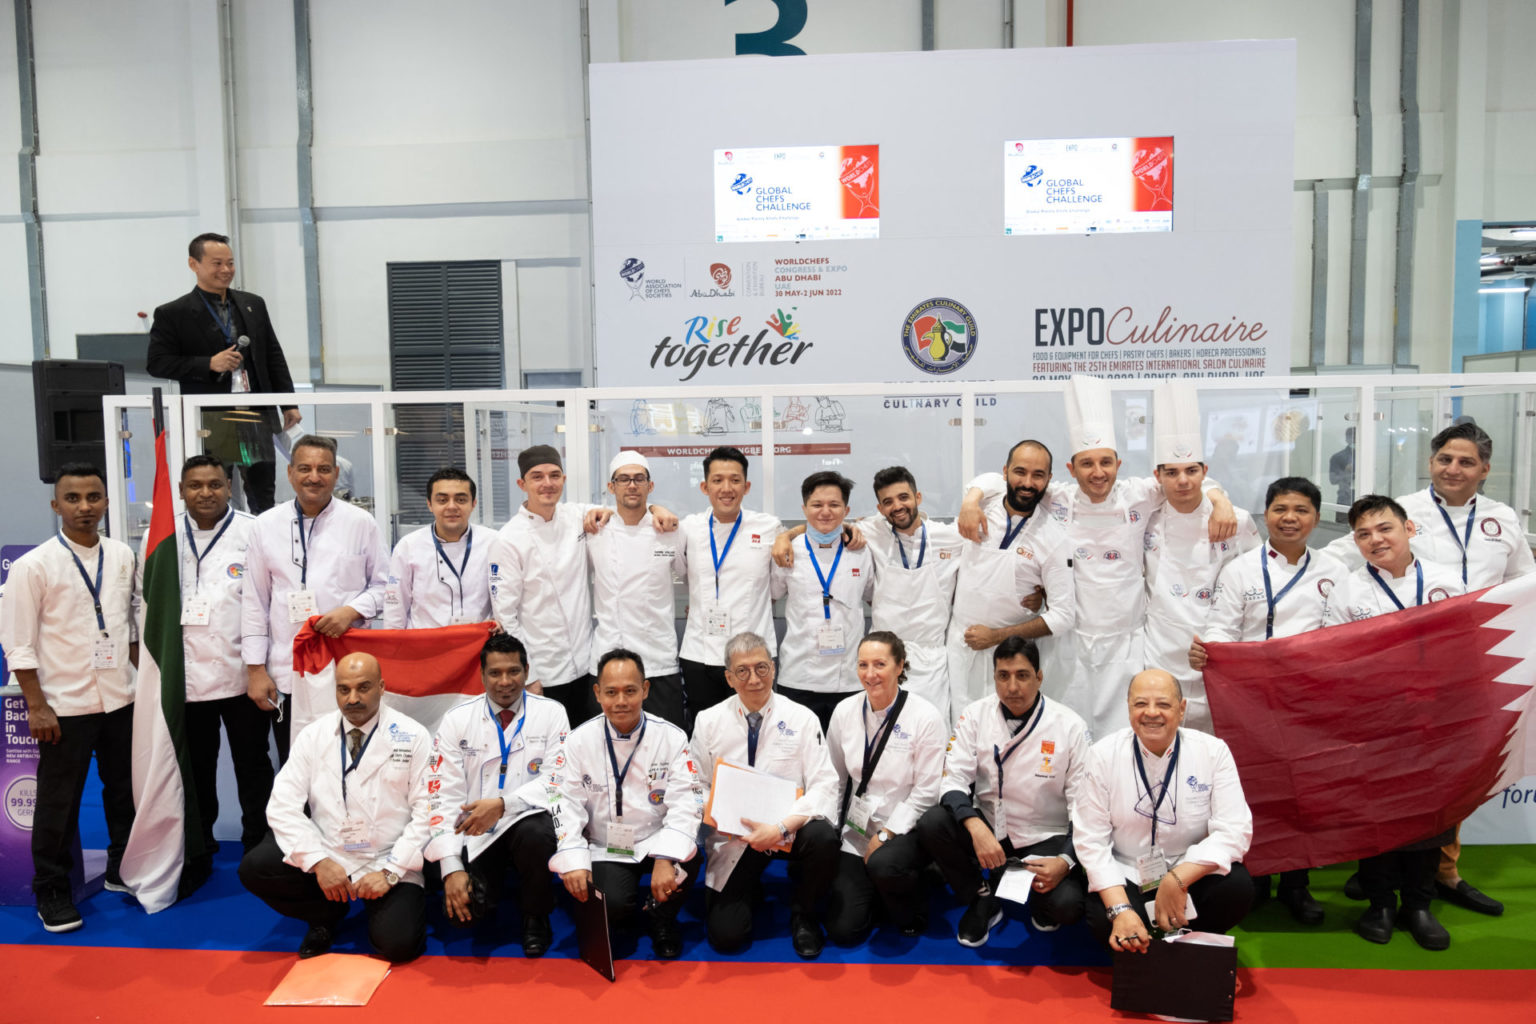 Worldchefs Congress & Expo Global Chefs Challenge Finals